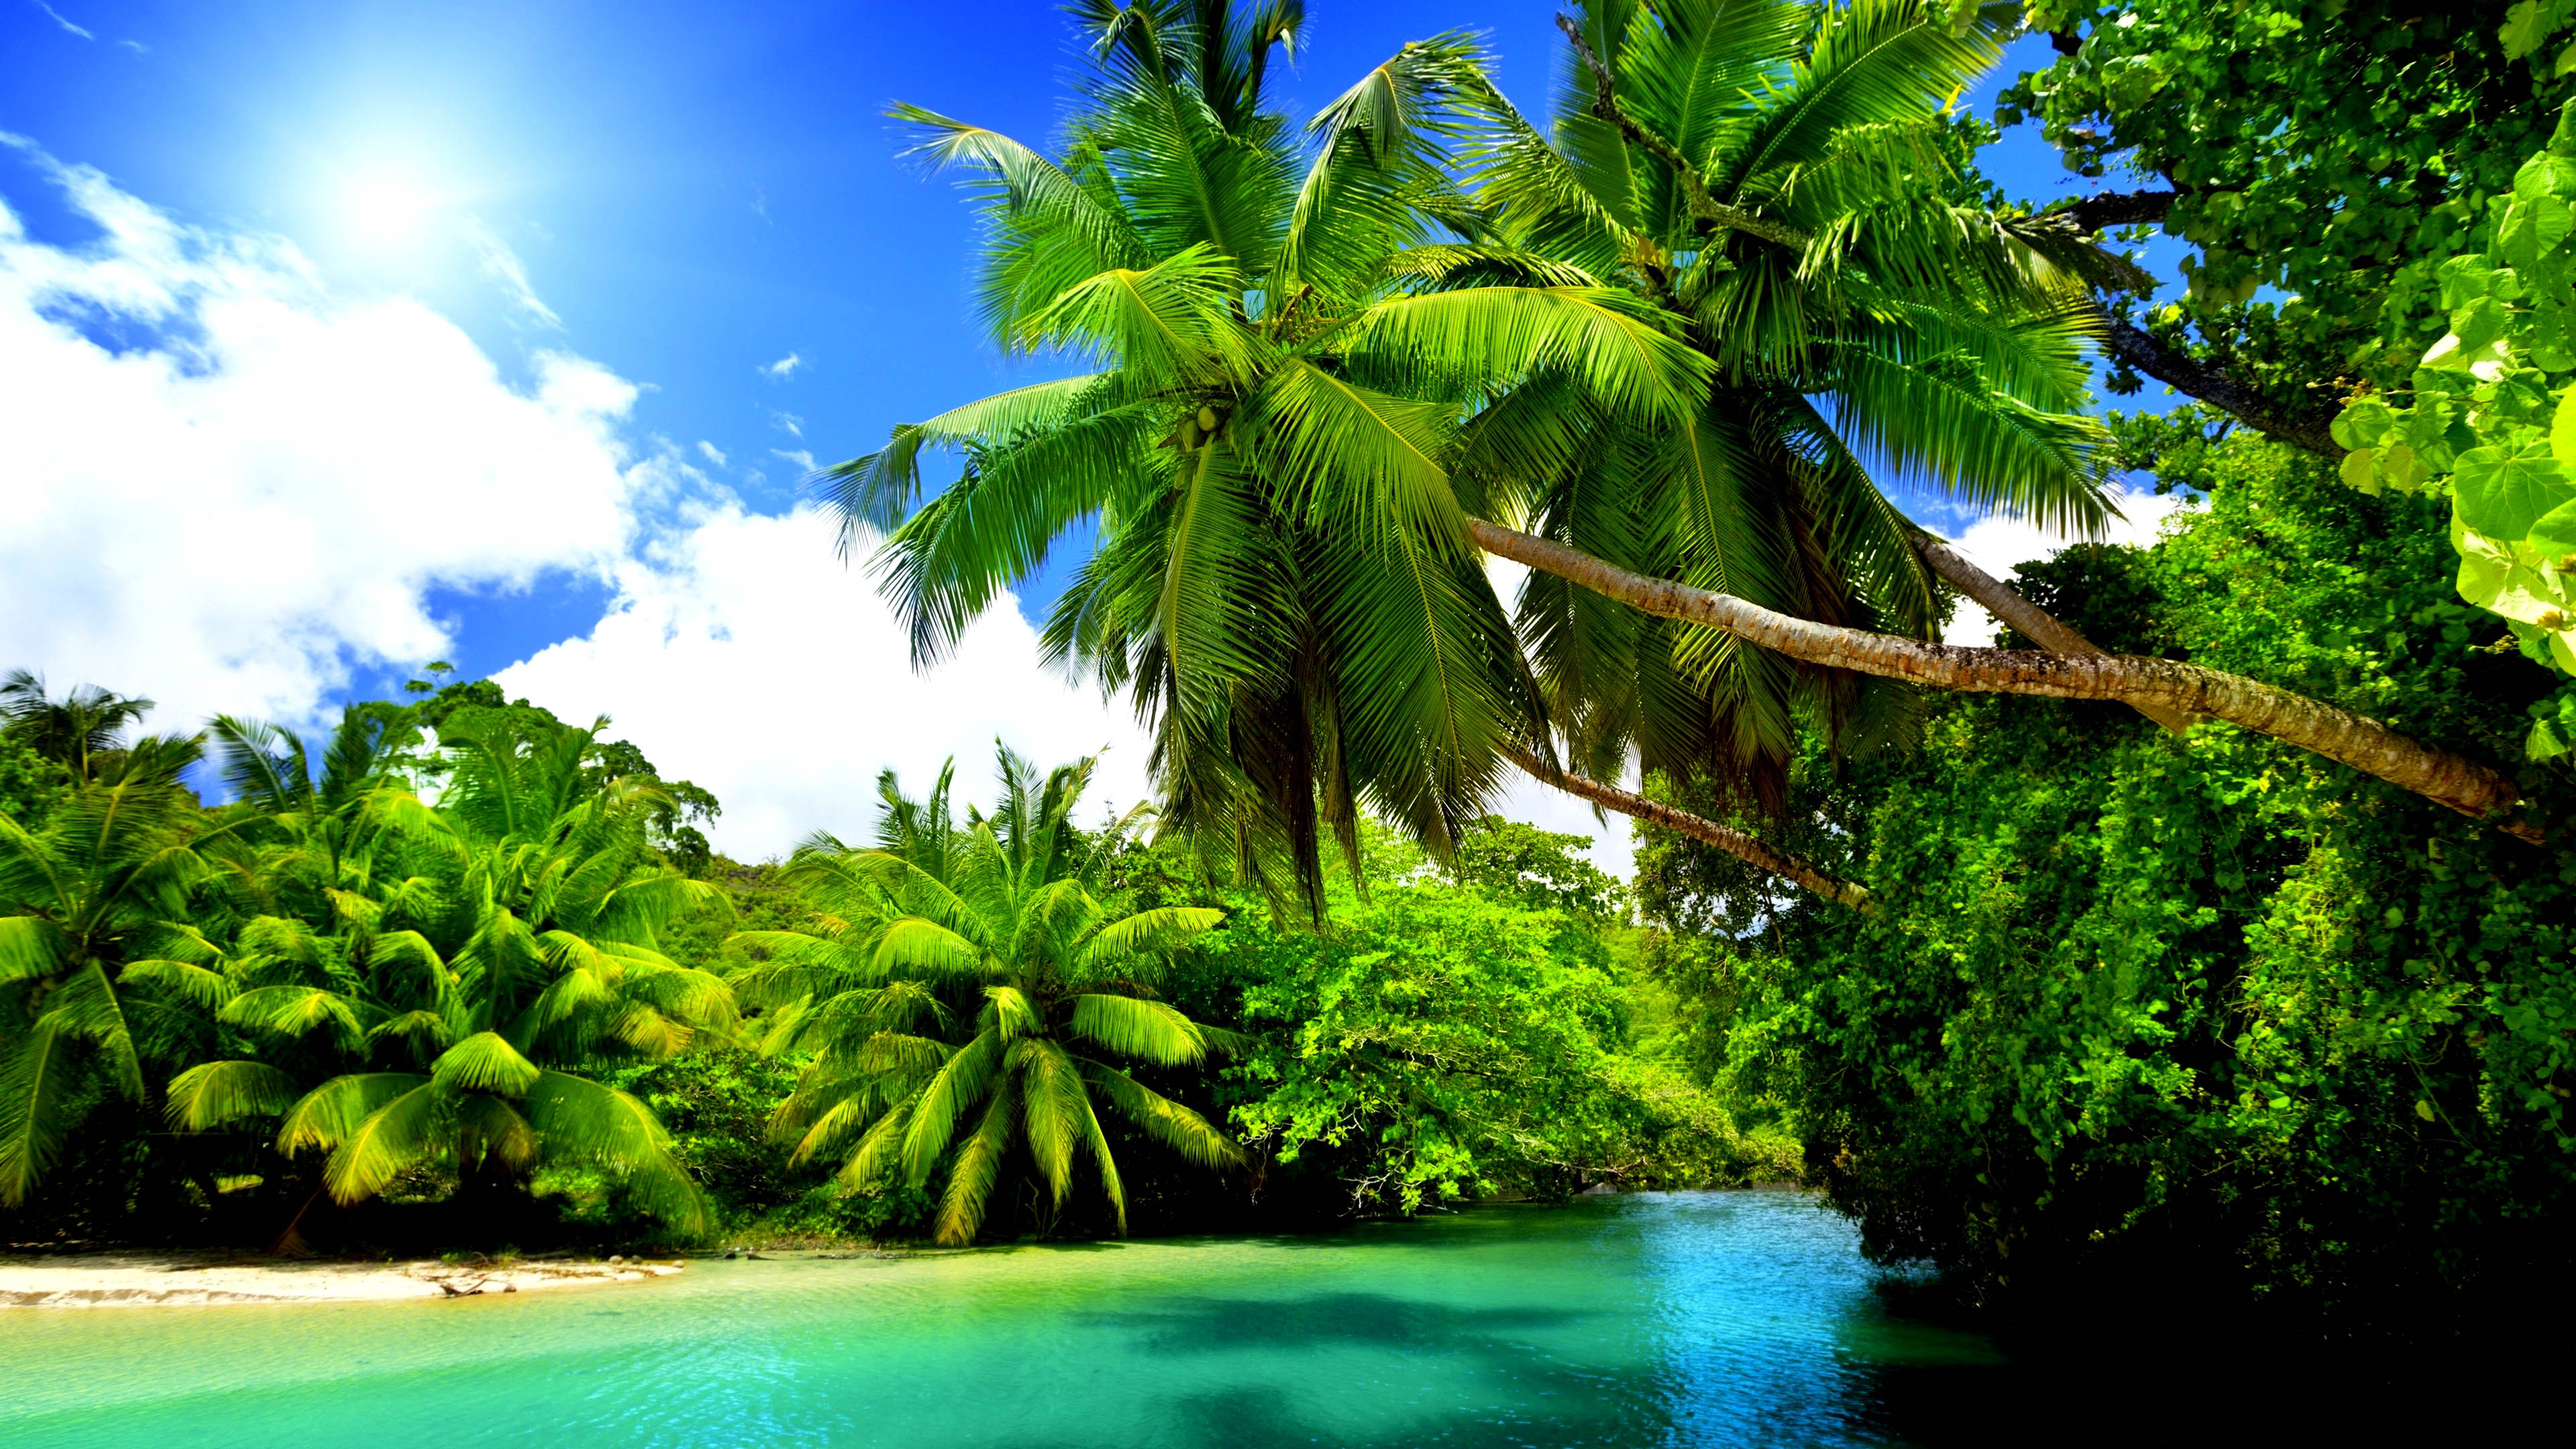 Amazing Beach Under The Palms Wallpaper Desktop Image